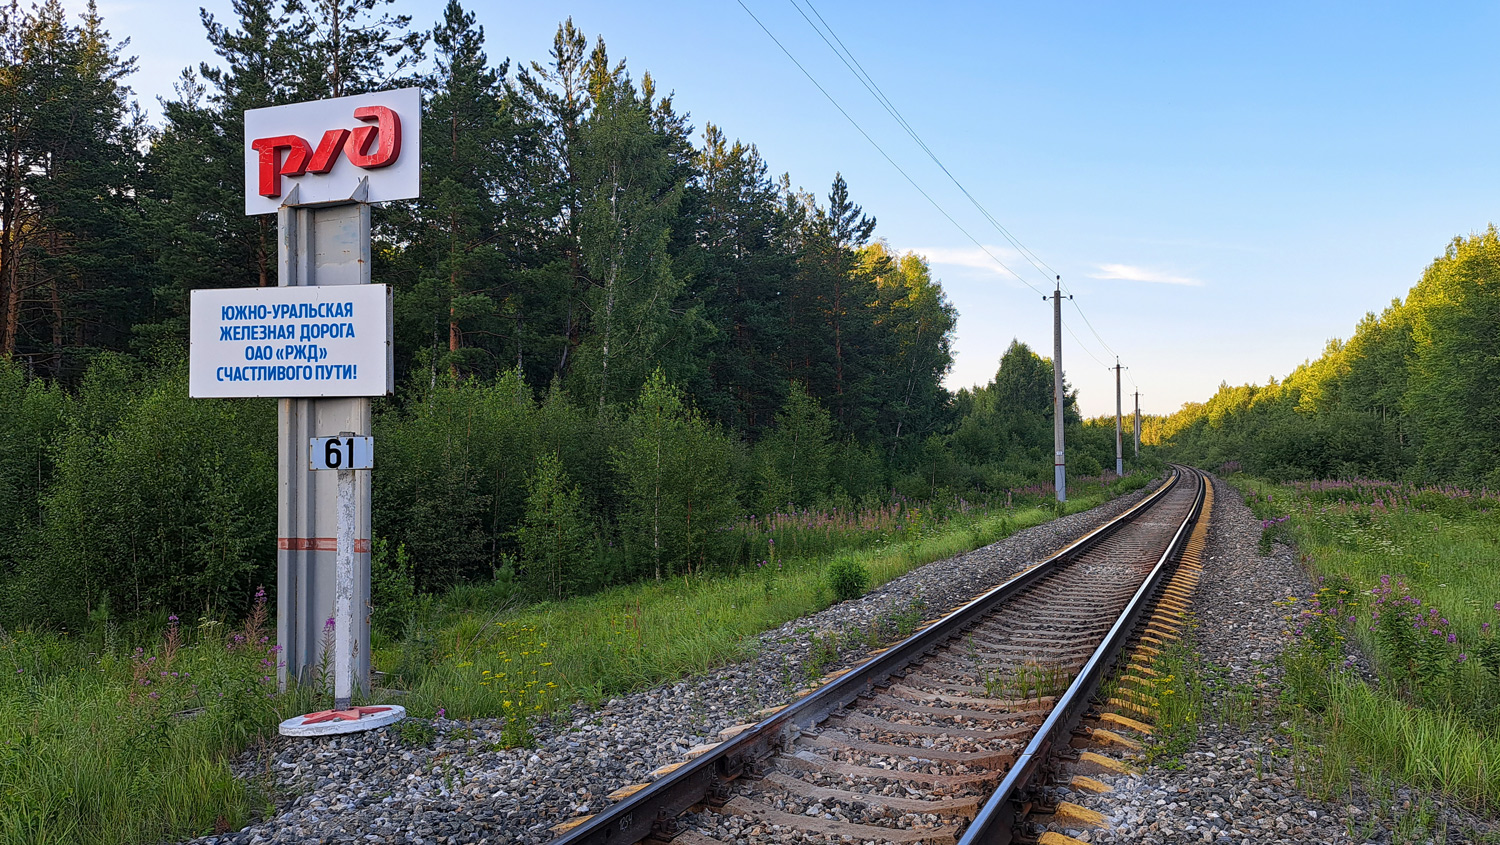 South Urals Railways — Miscellaneous photos